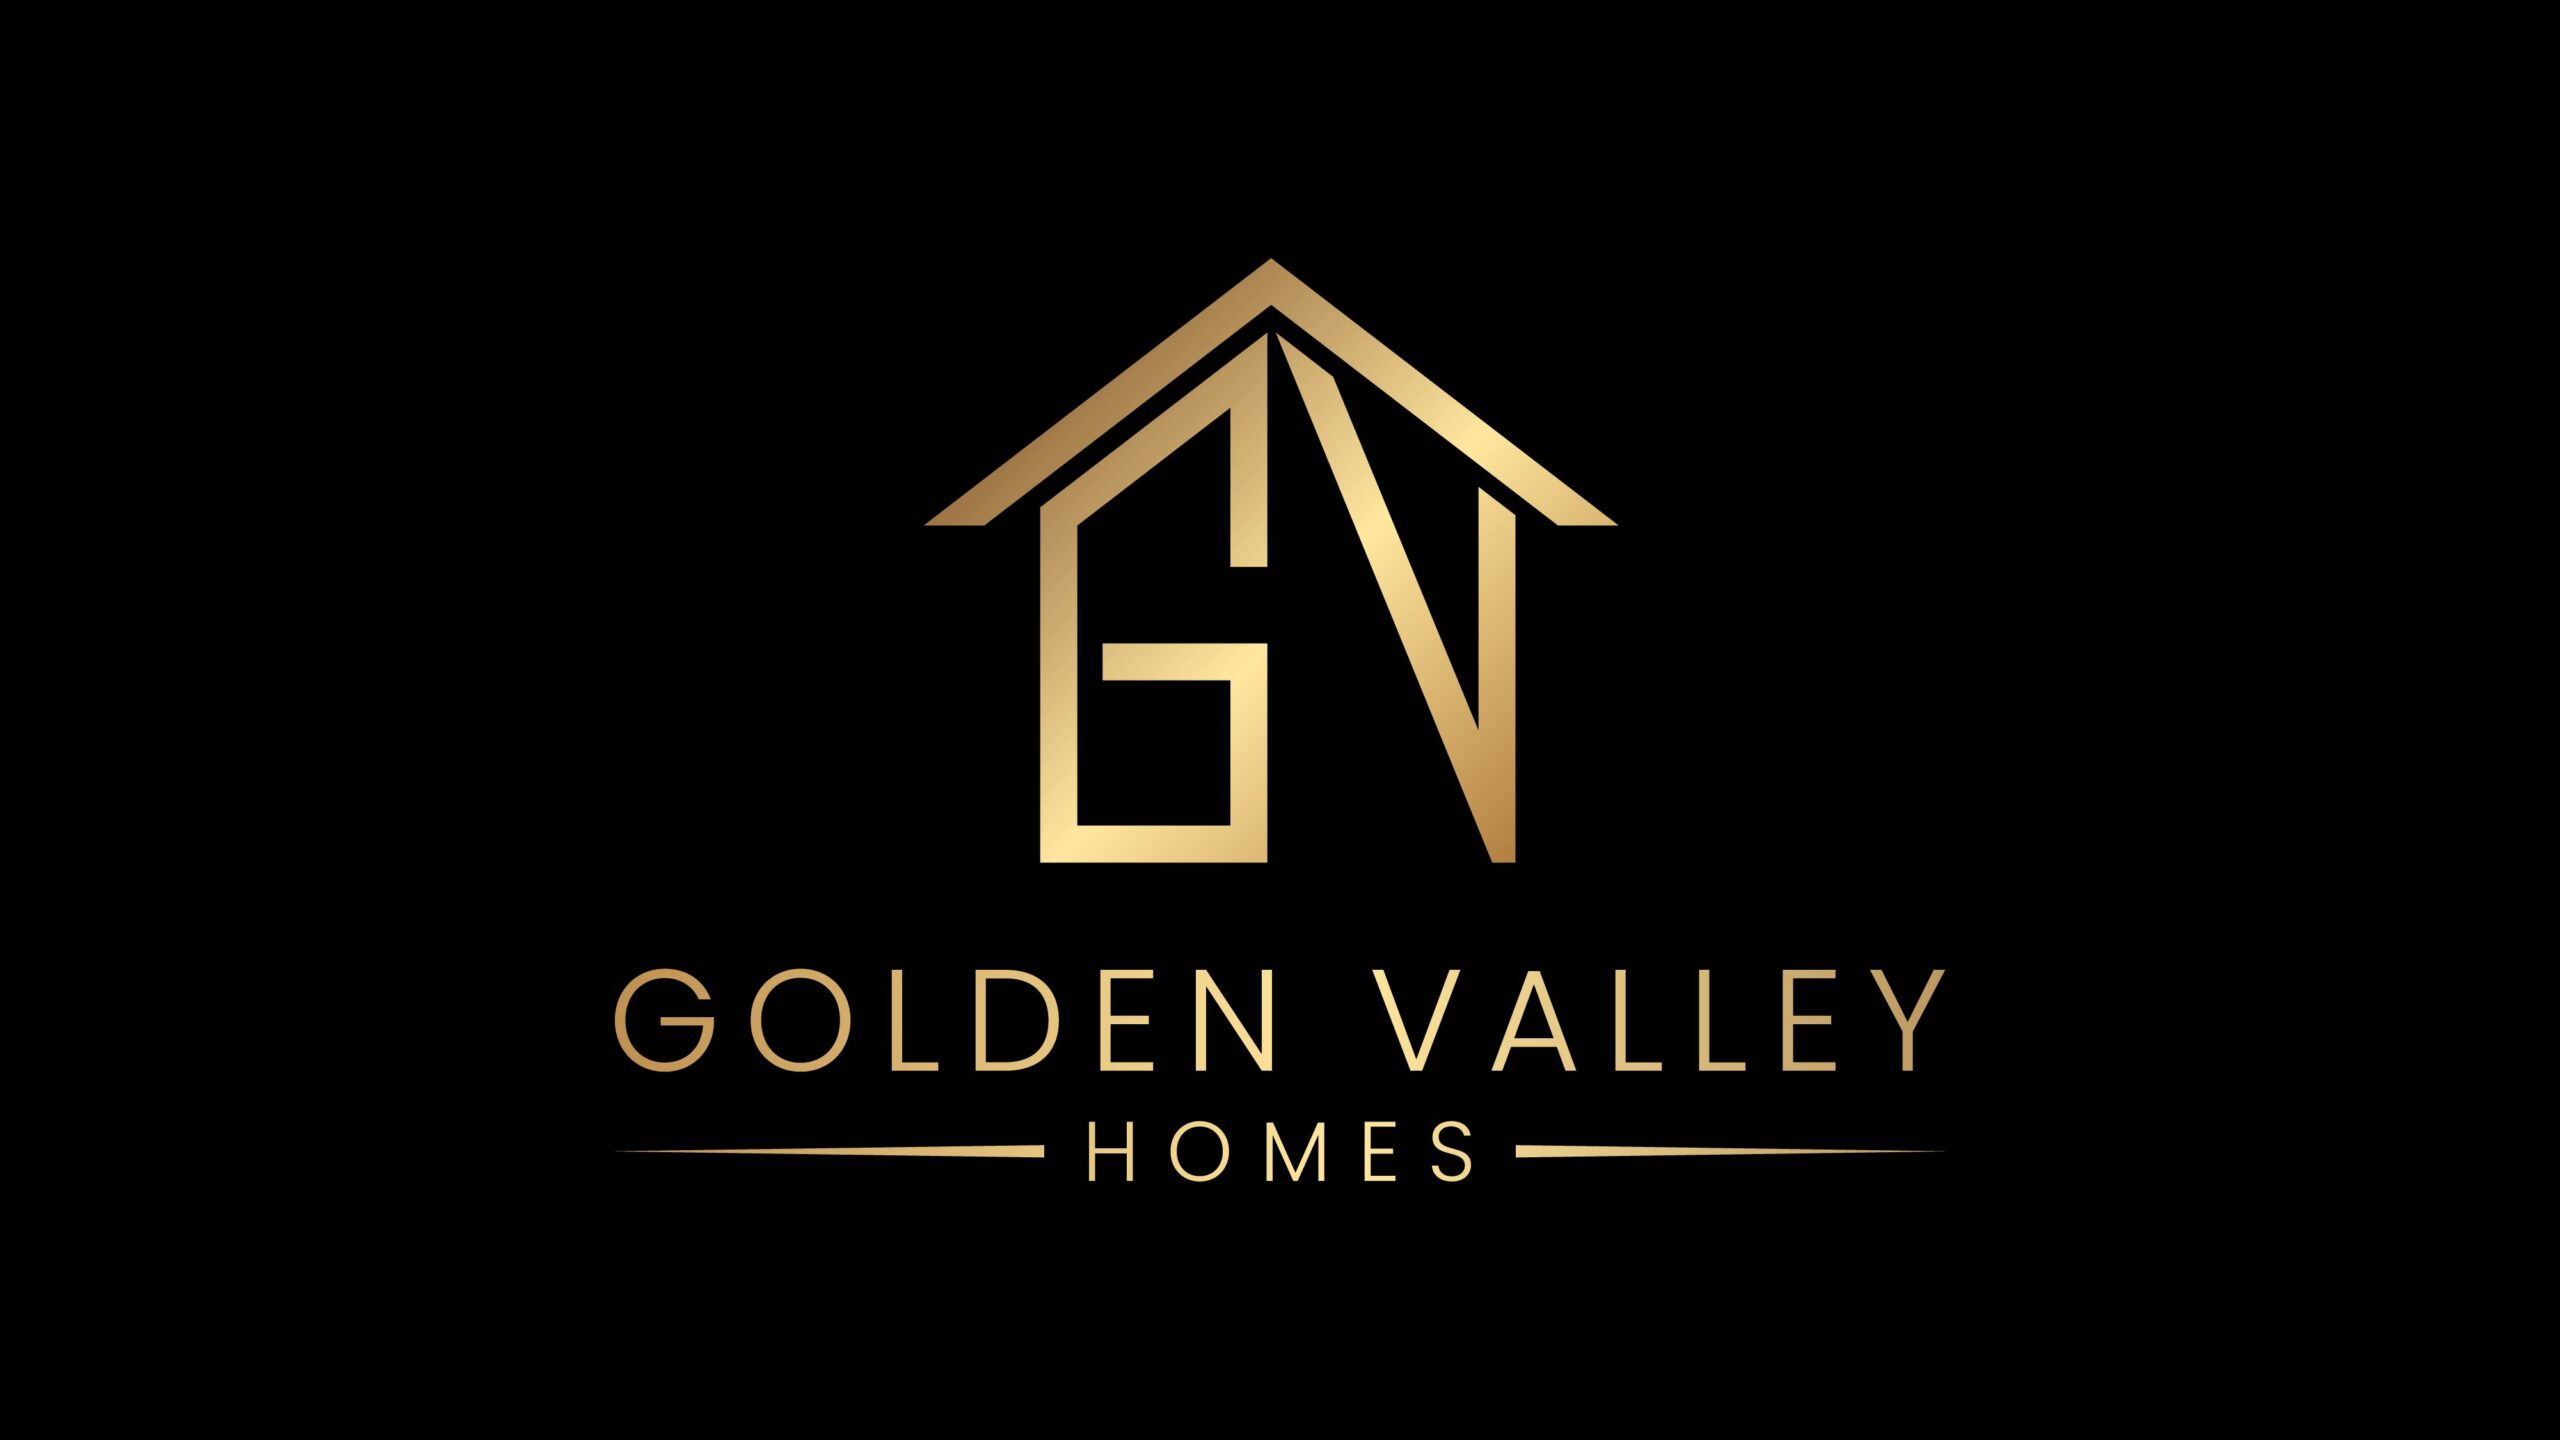 Golden Valley Homes